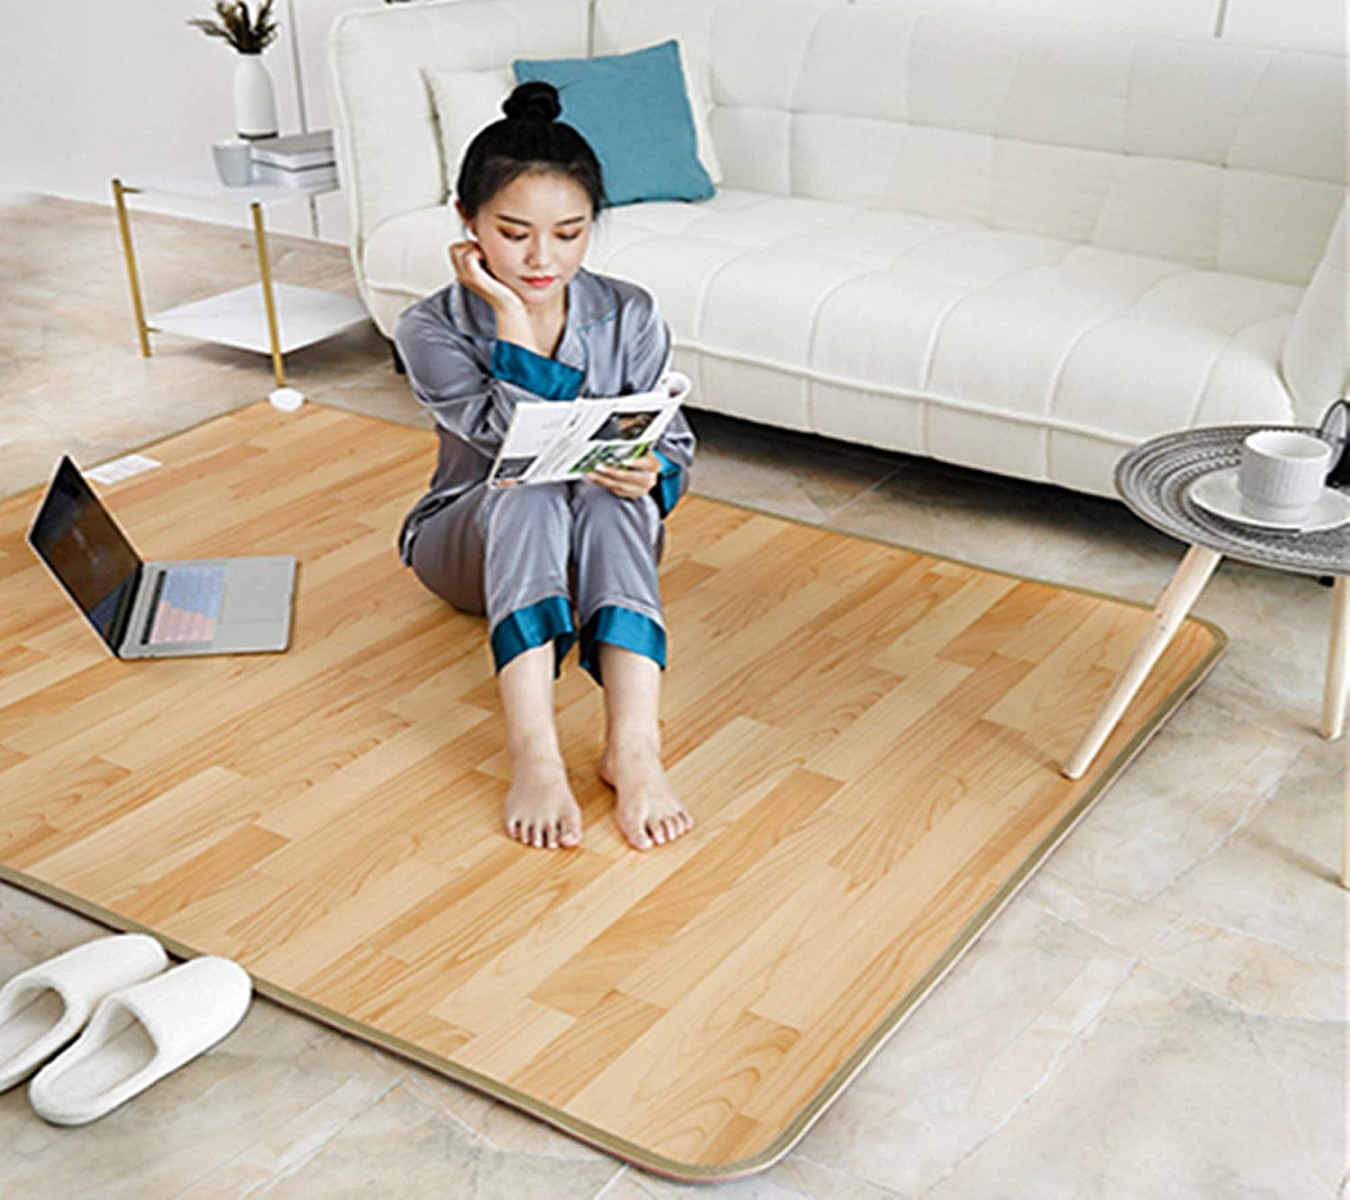 VSDEXR Heated Floor Mat, Electric Graphene Carpet, Fast Heating